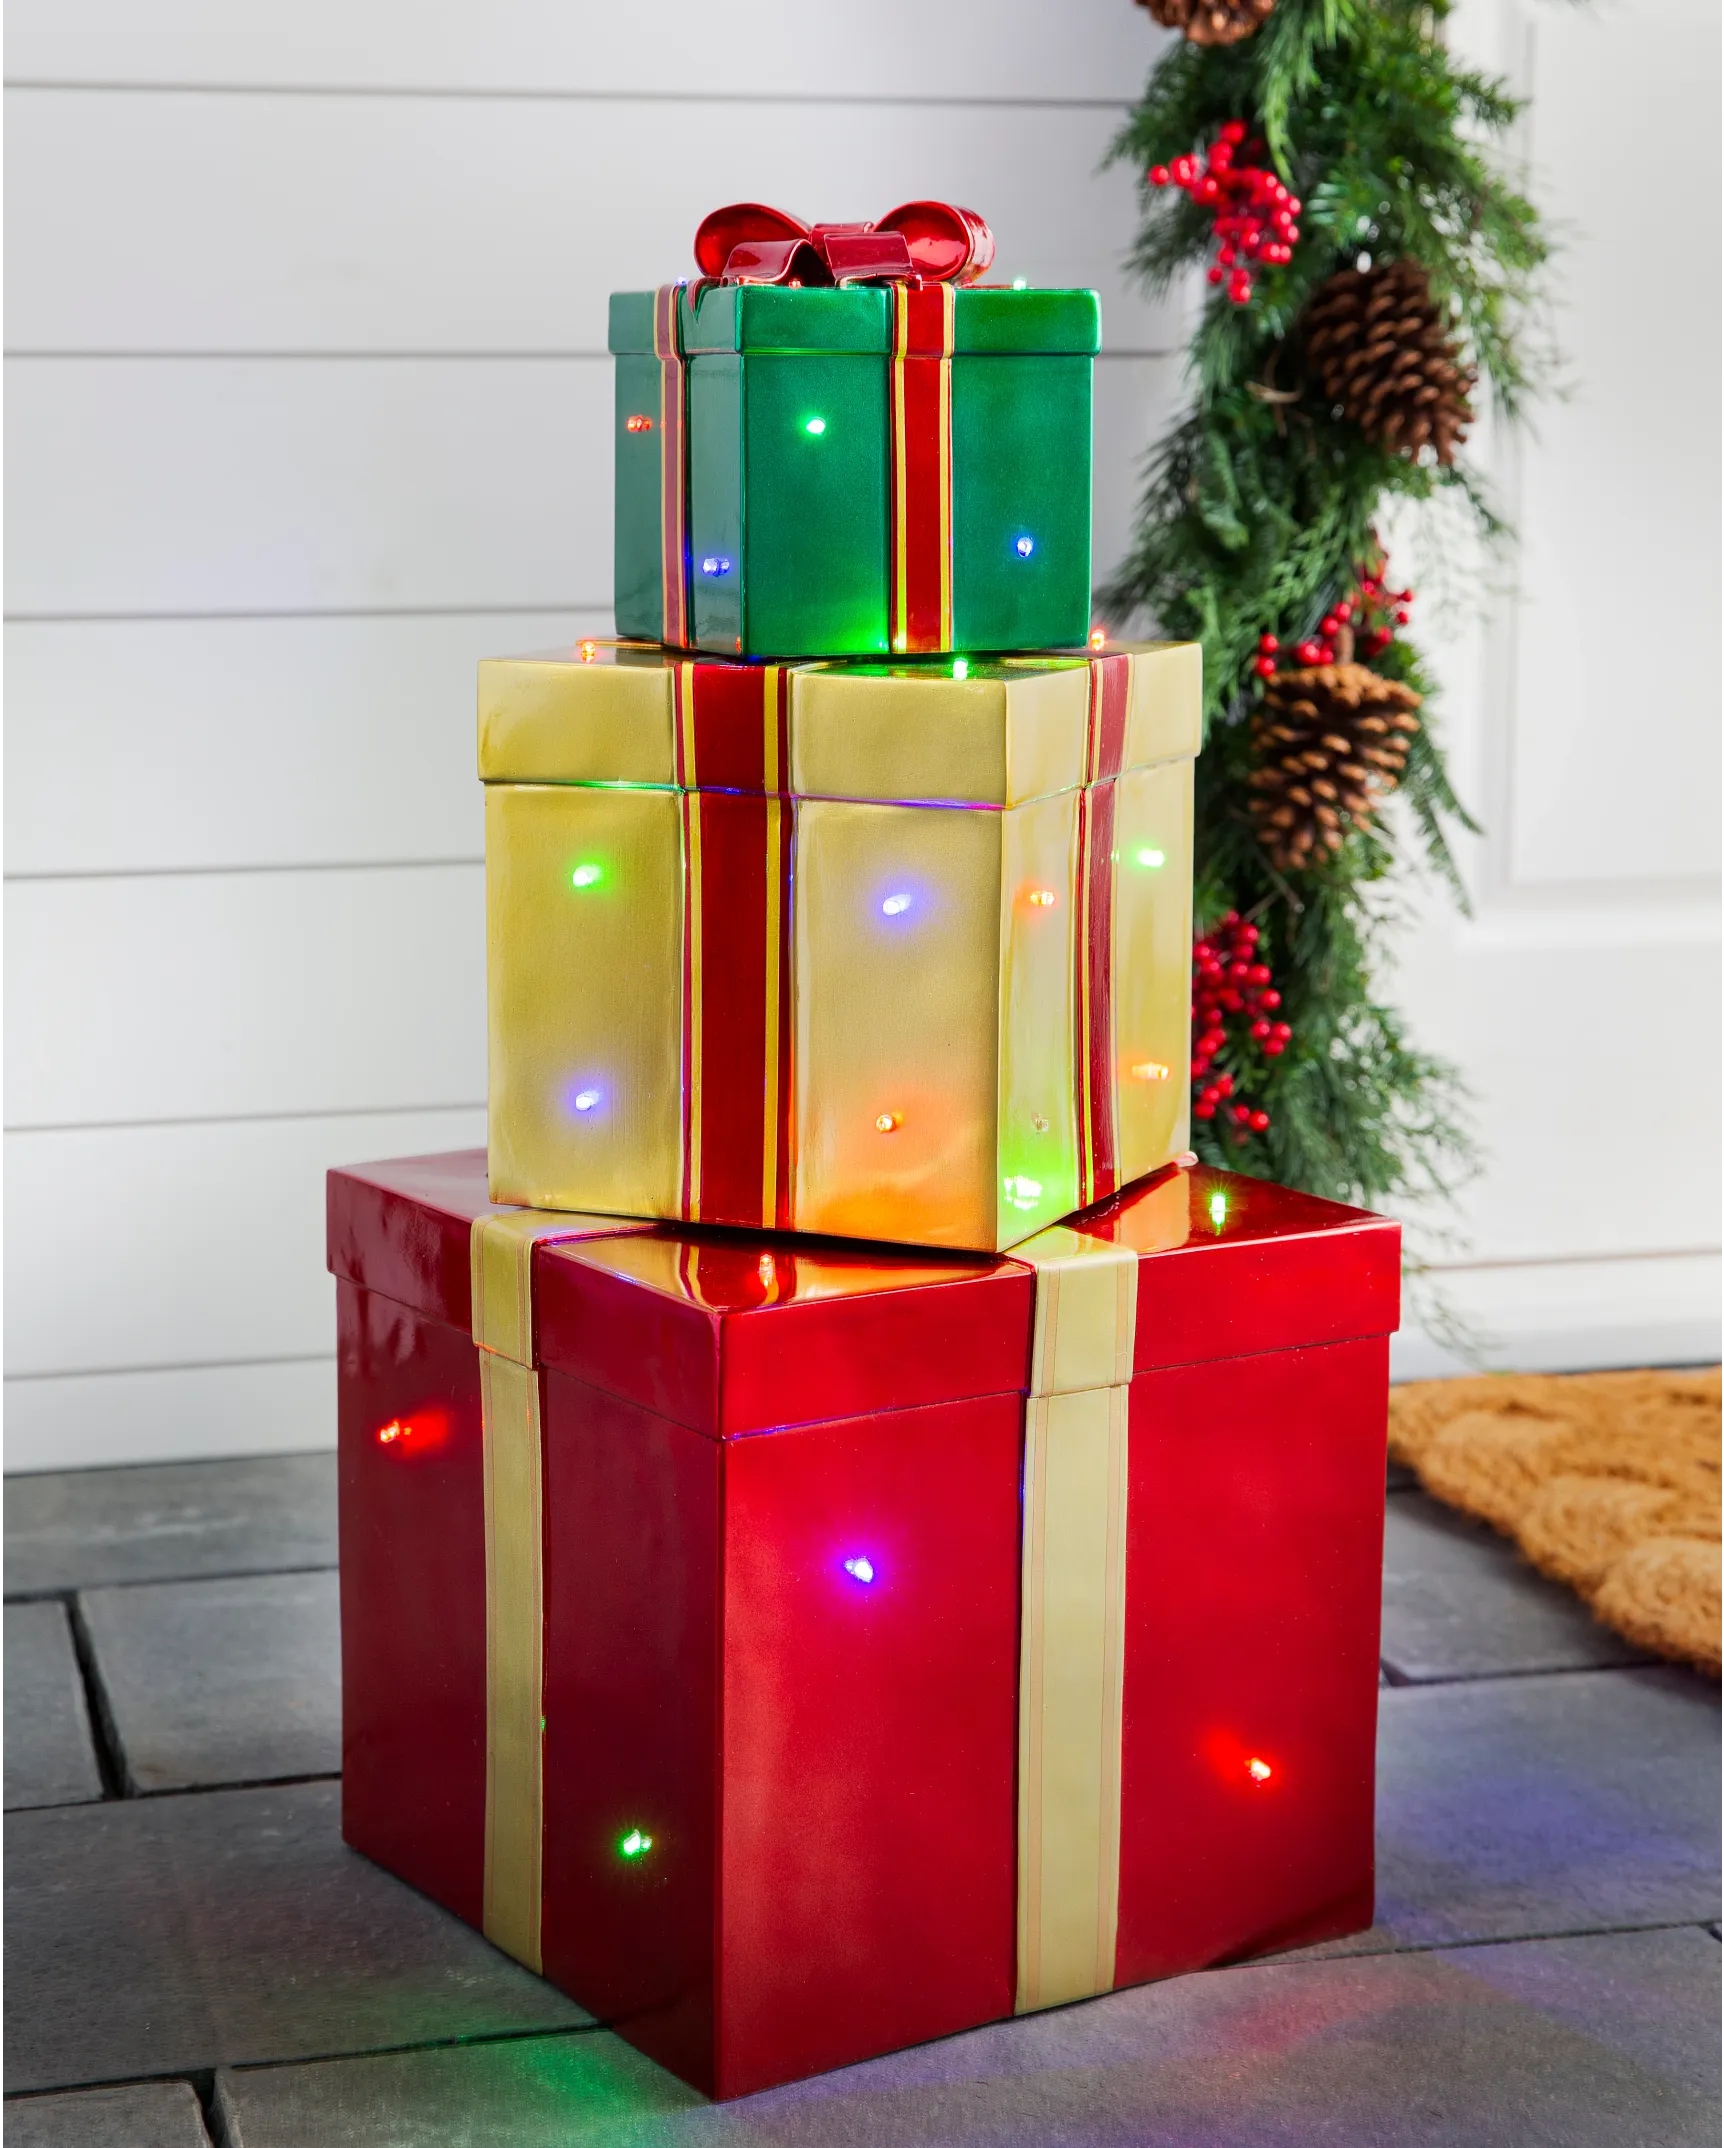 https://source.widen.net/content/sxxg6udl06/webp/OUT-2041000_Outdoor-Stackable-Lighted-Christmas-Gifts_SSC.webp?position=c&color=ffffffff&quality=80&u=7mzq6p&w=862&h=1074&retina=true